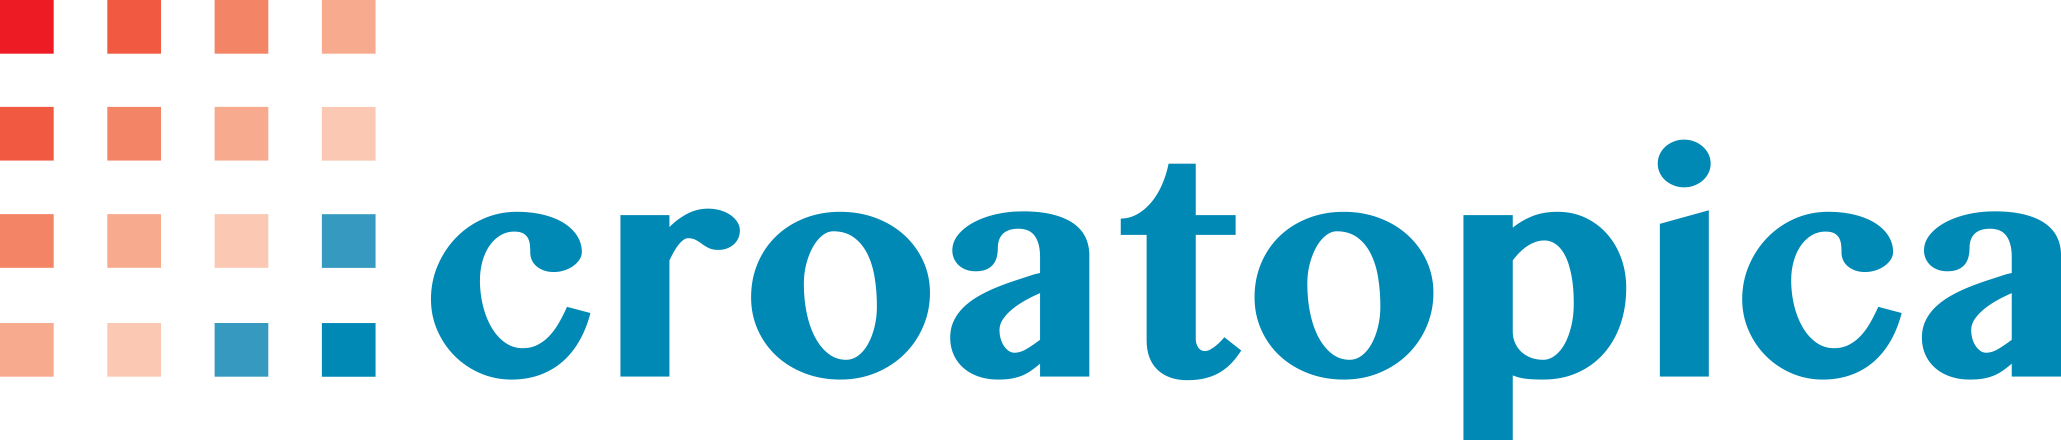 Croatopica Logo